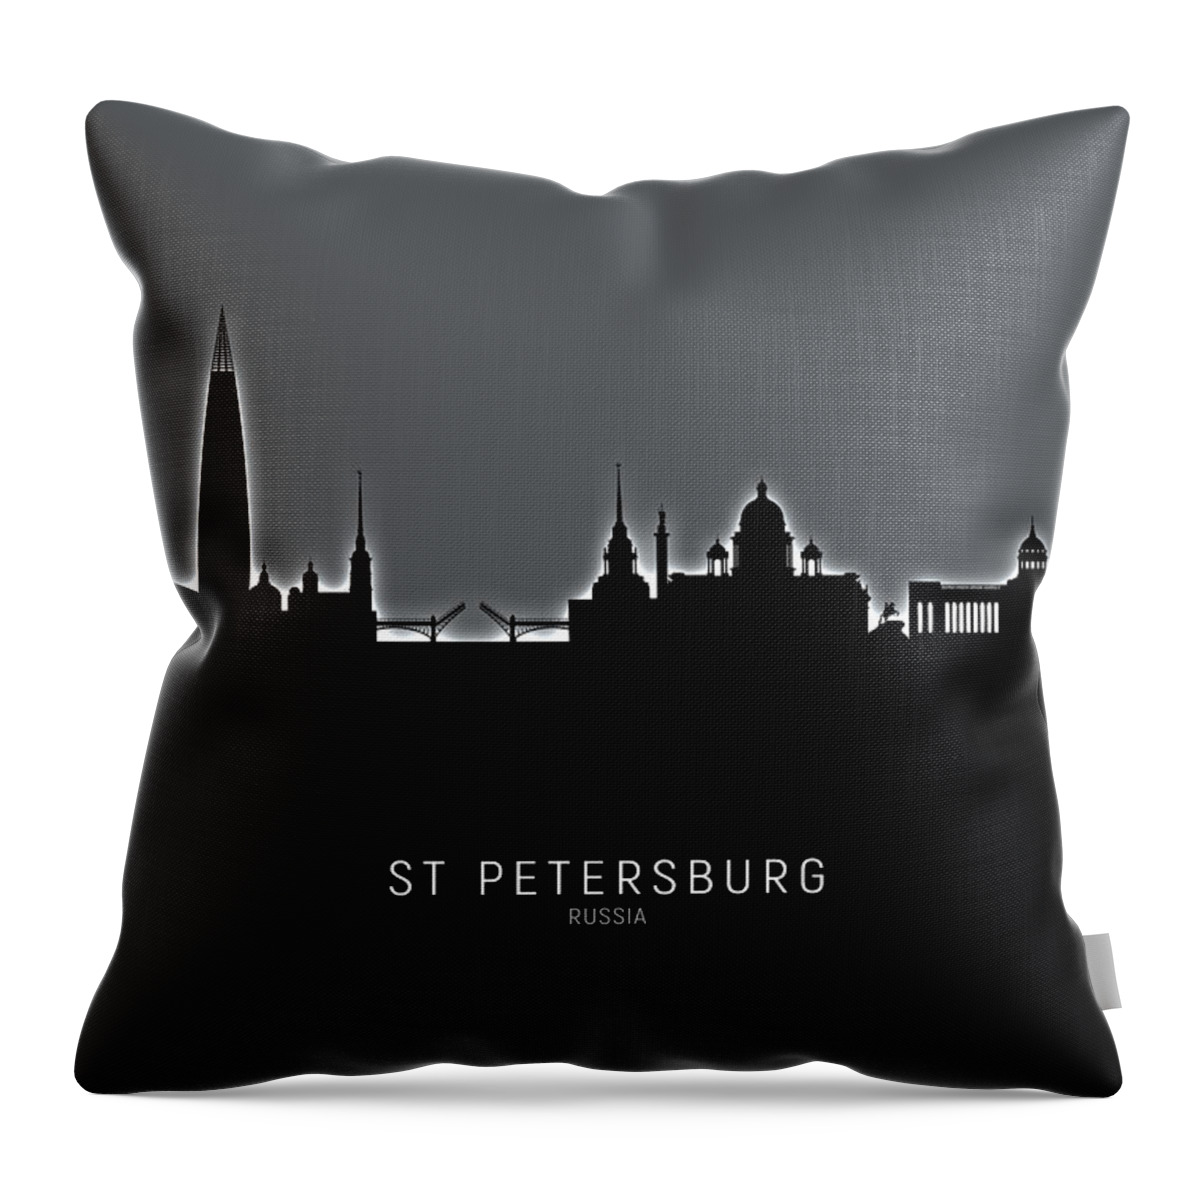 St Petersburg Throw Pillow featuring the digital art St Petersburg Russia Skyline #42 by Michael Tompsett